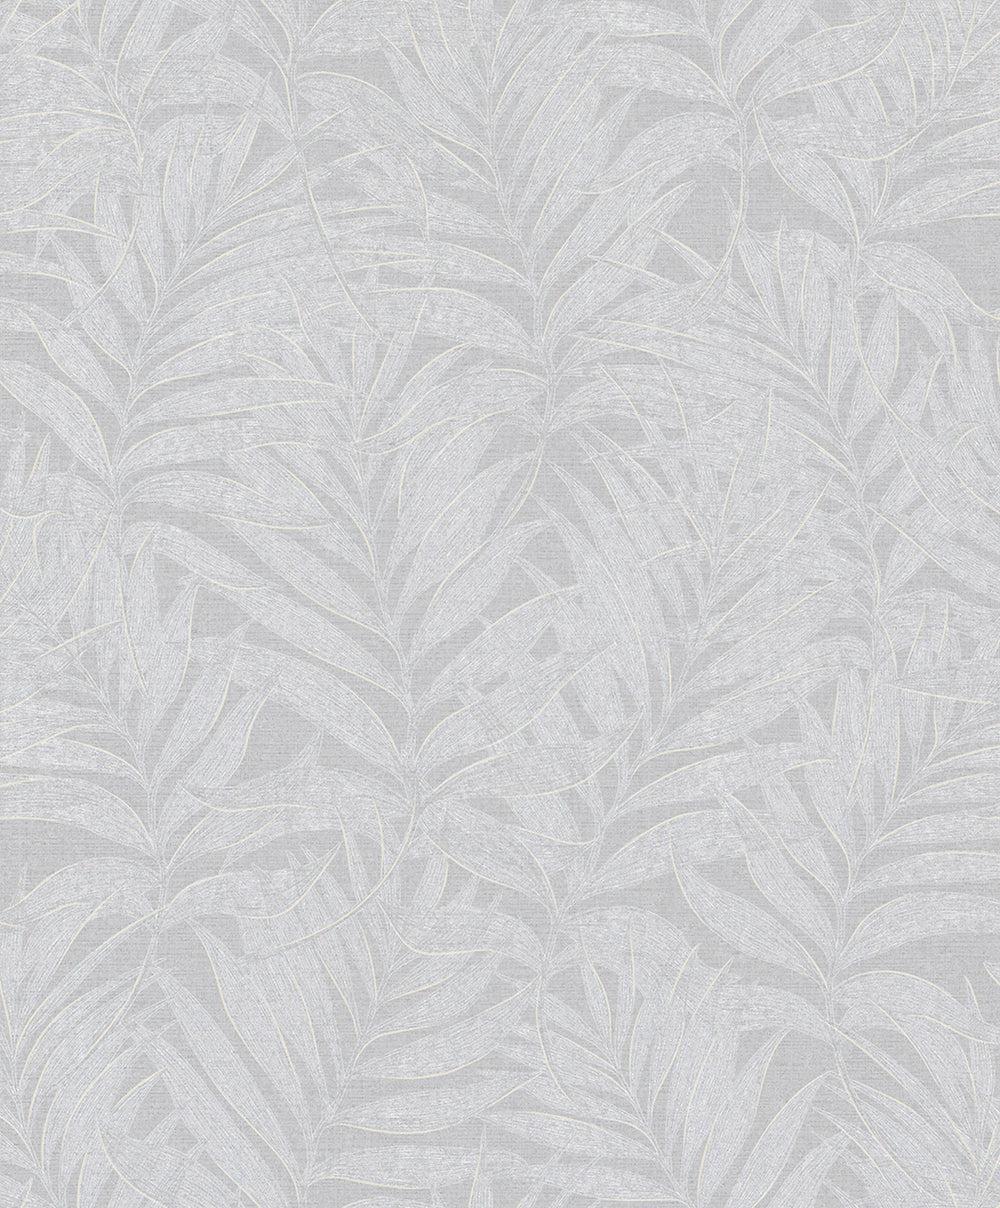 Habitat - Leaves botanical wallpaper Marburg Roll Grey-White  34005